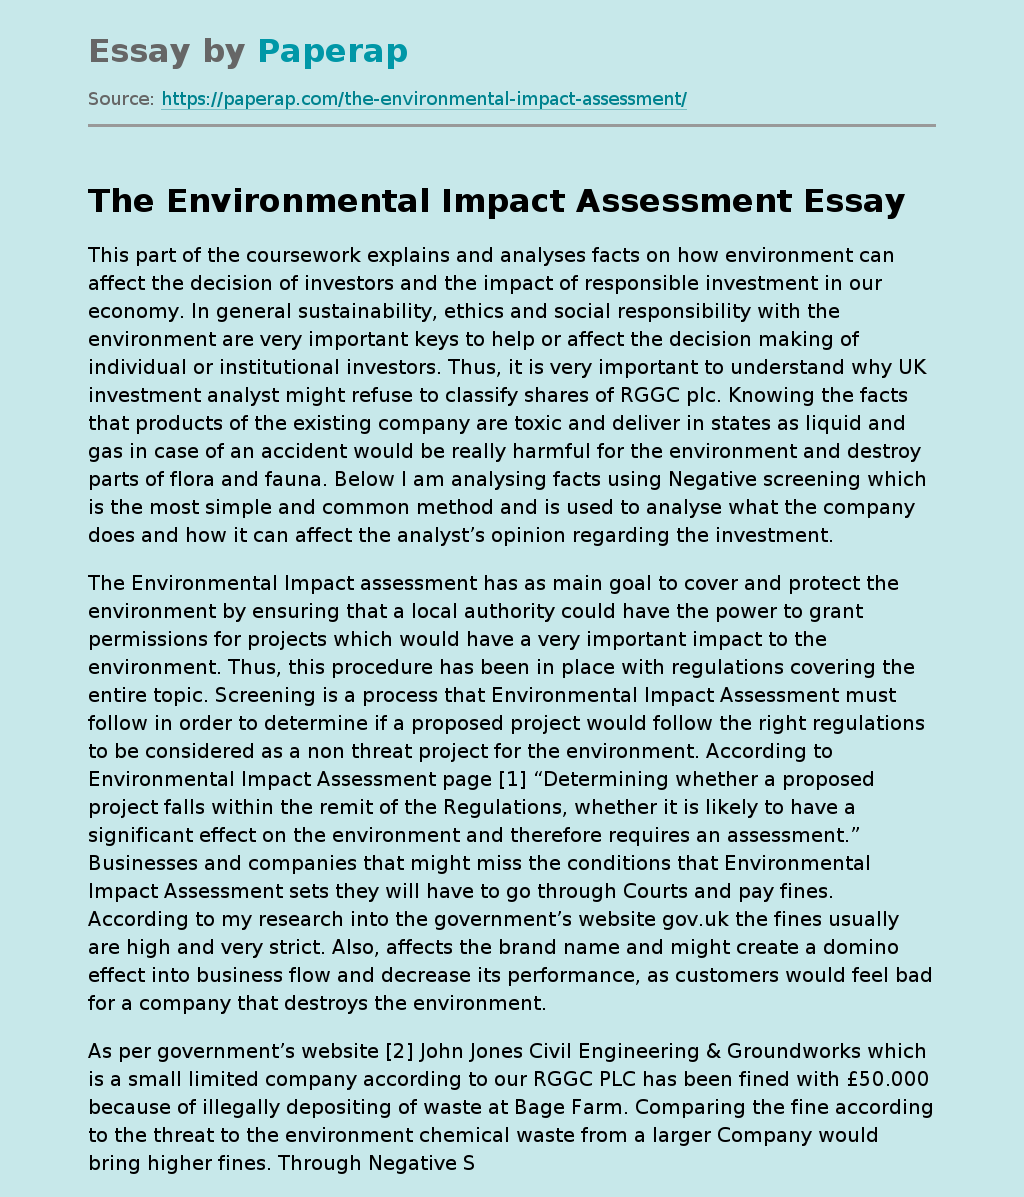 The Environmental Impact Assessment